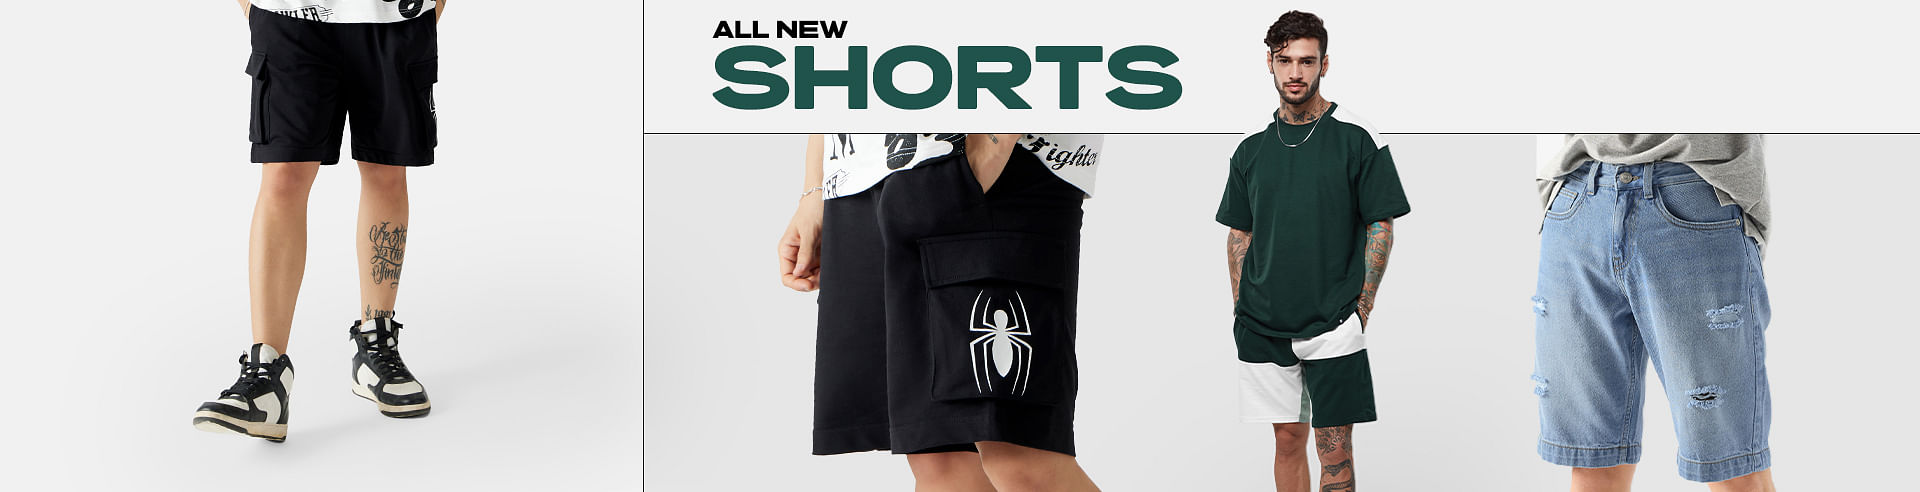 Men's Sweatshorts - Gym Shorts, Buy Shorts for Men Online at The Souled ...